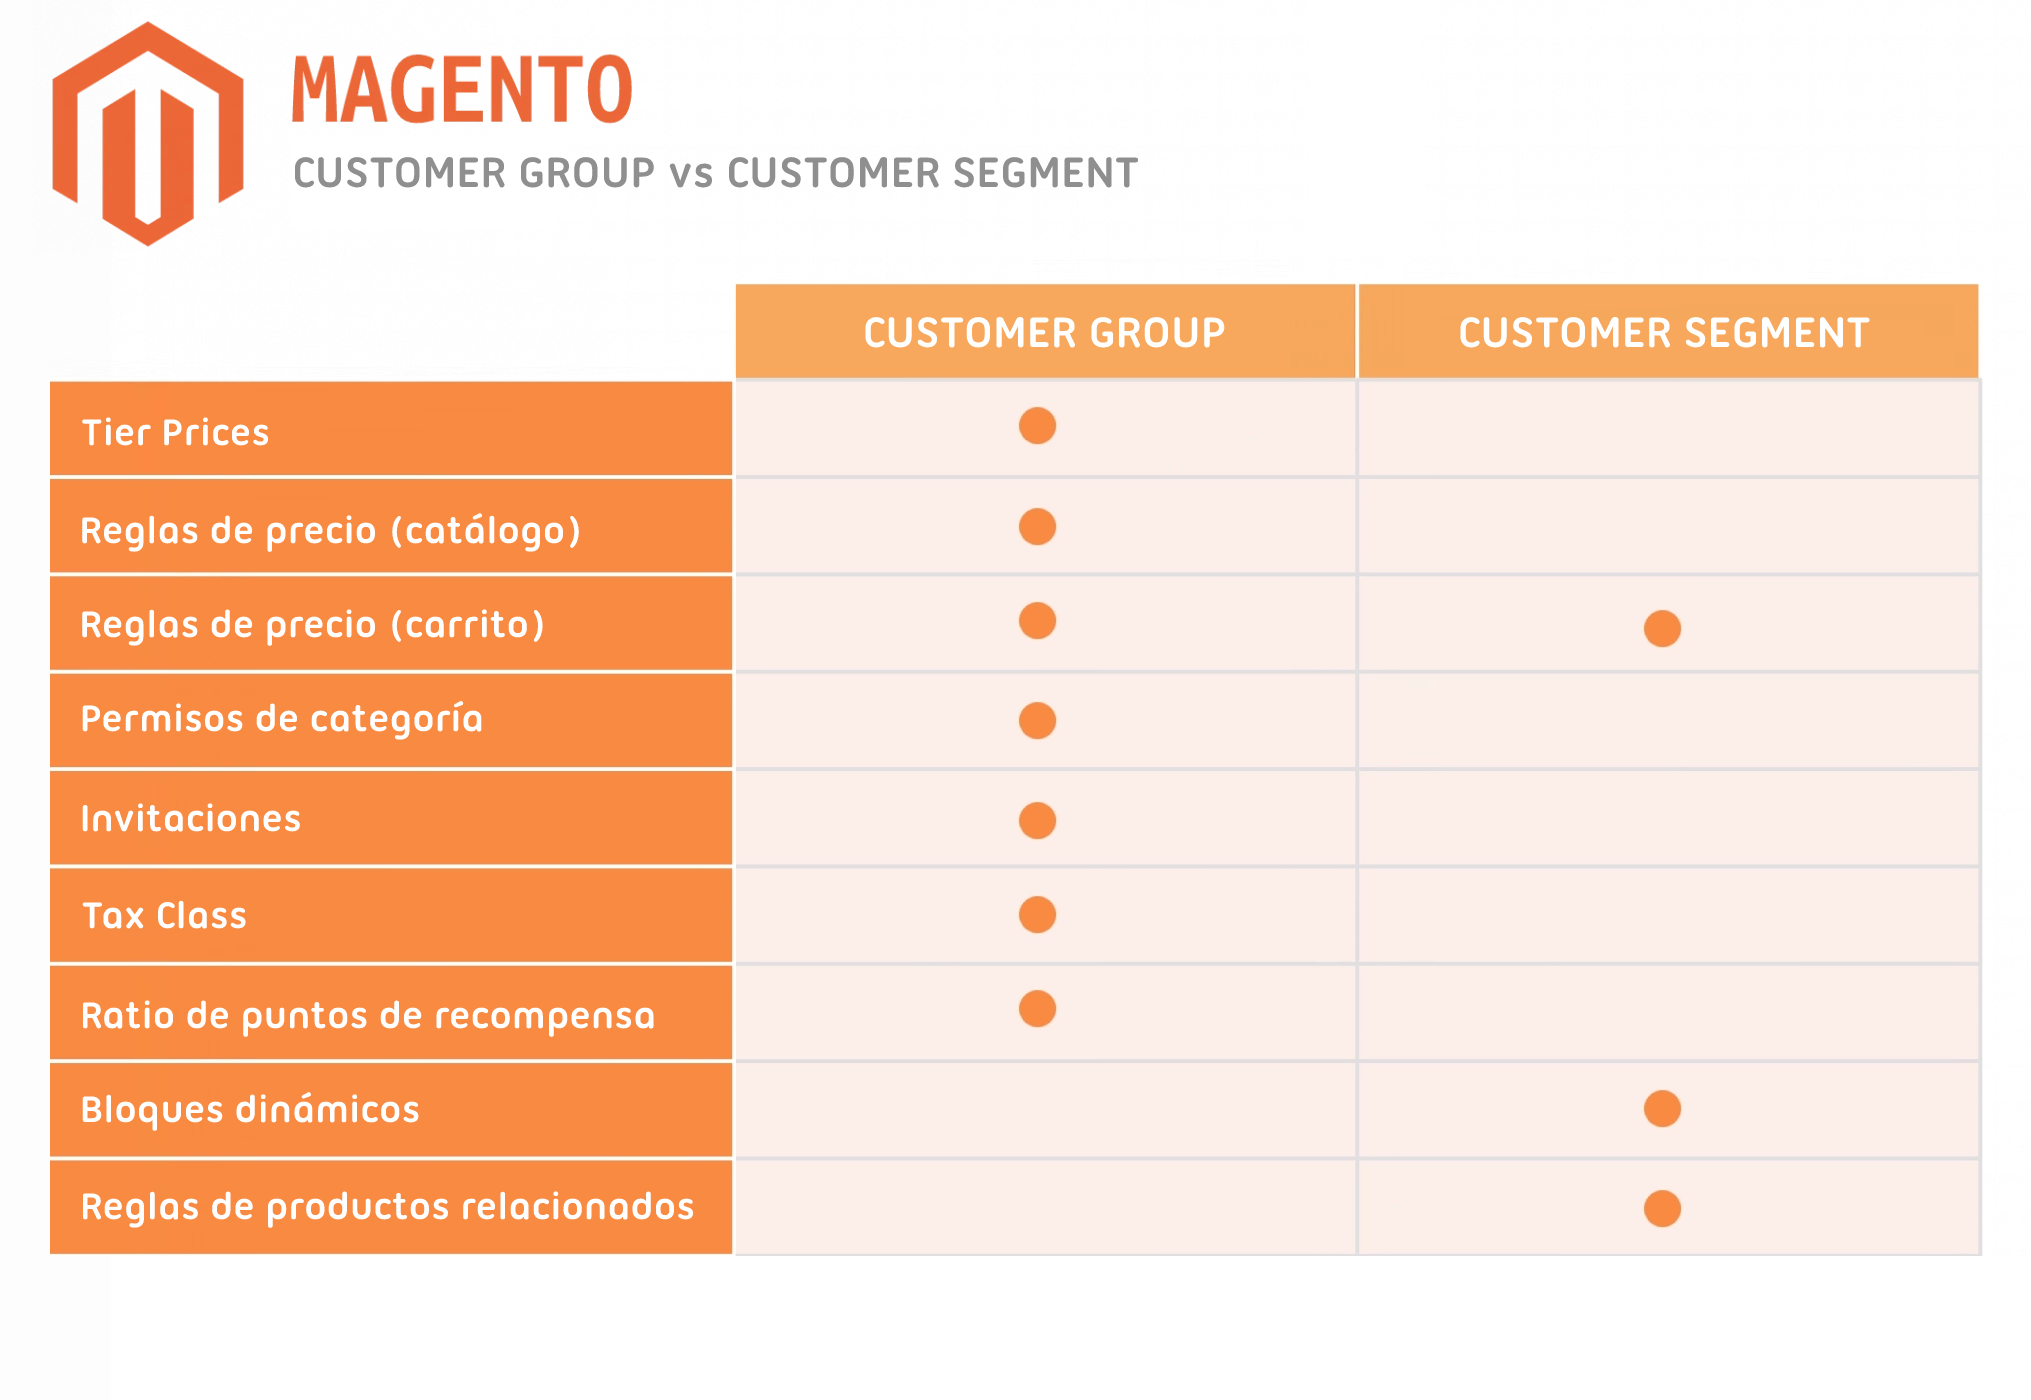 Magento: Customer groups vs Customer segments